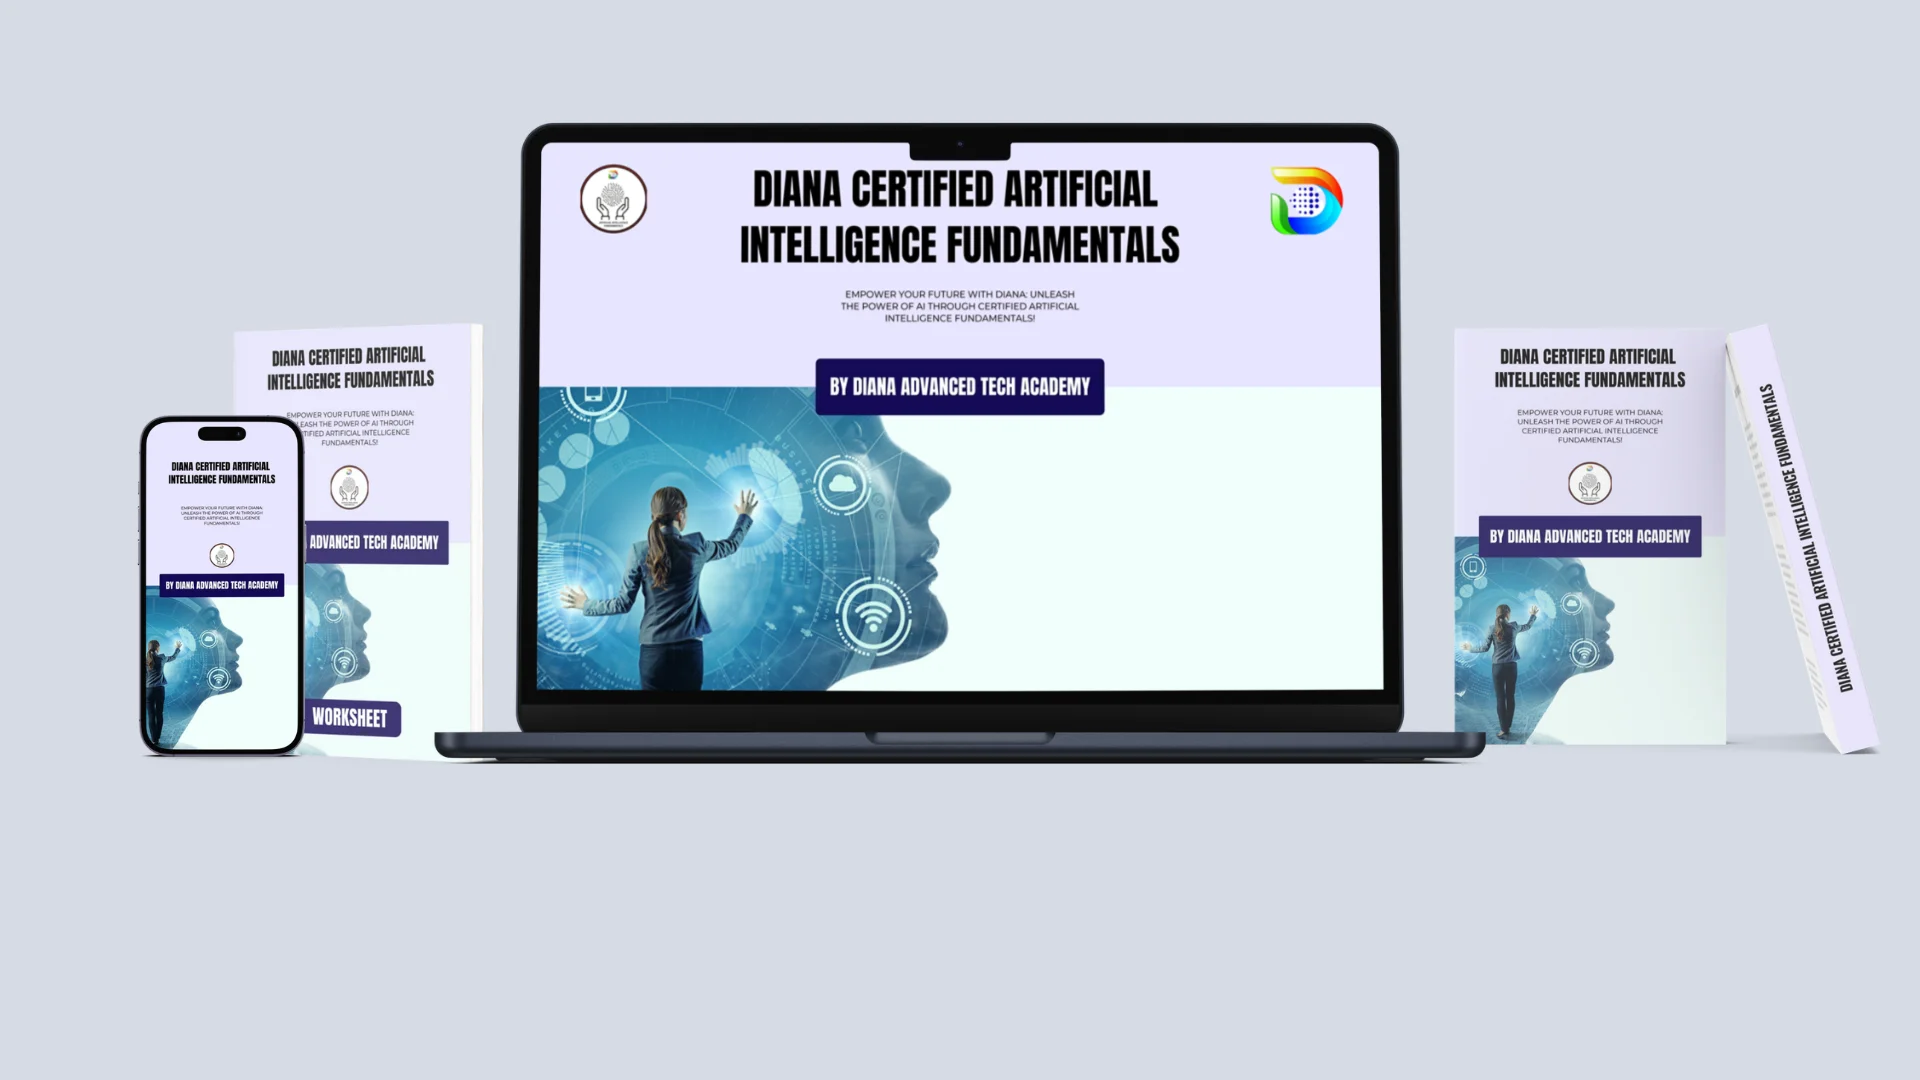 Diana Certified Artificial Intelligence Fundamentals